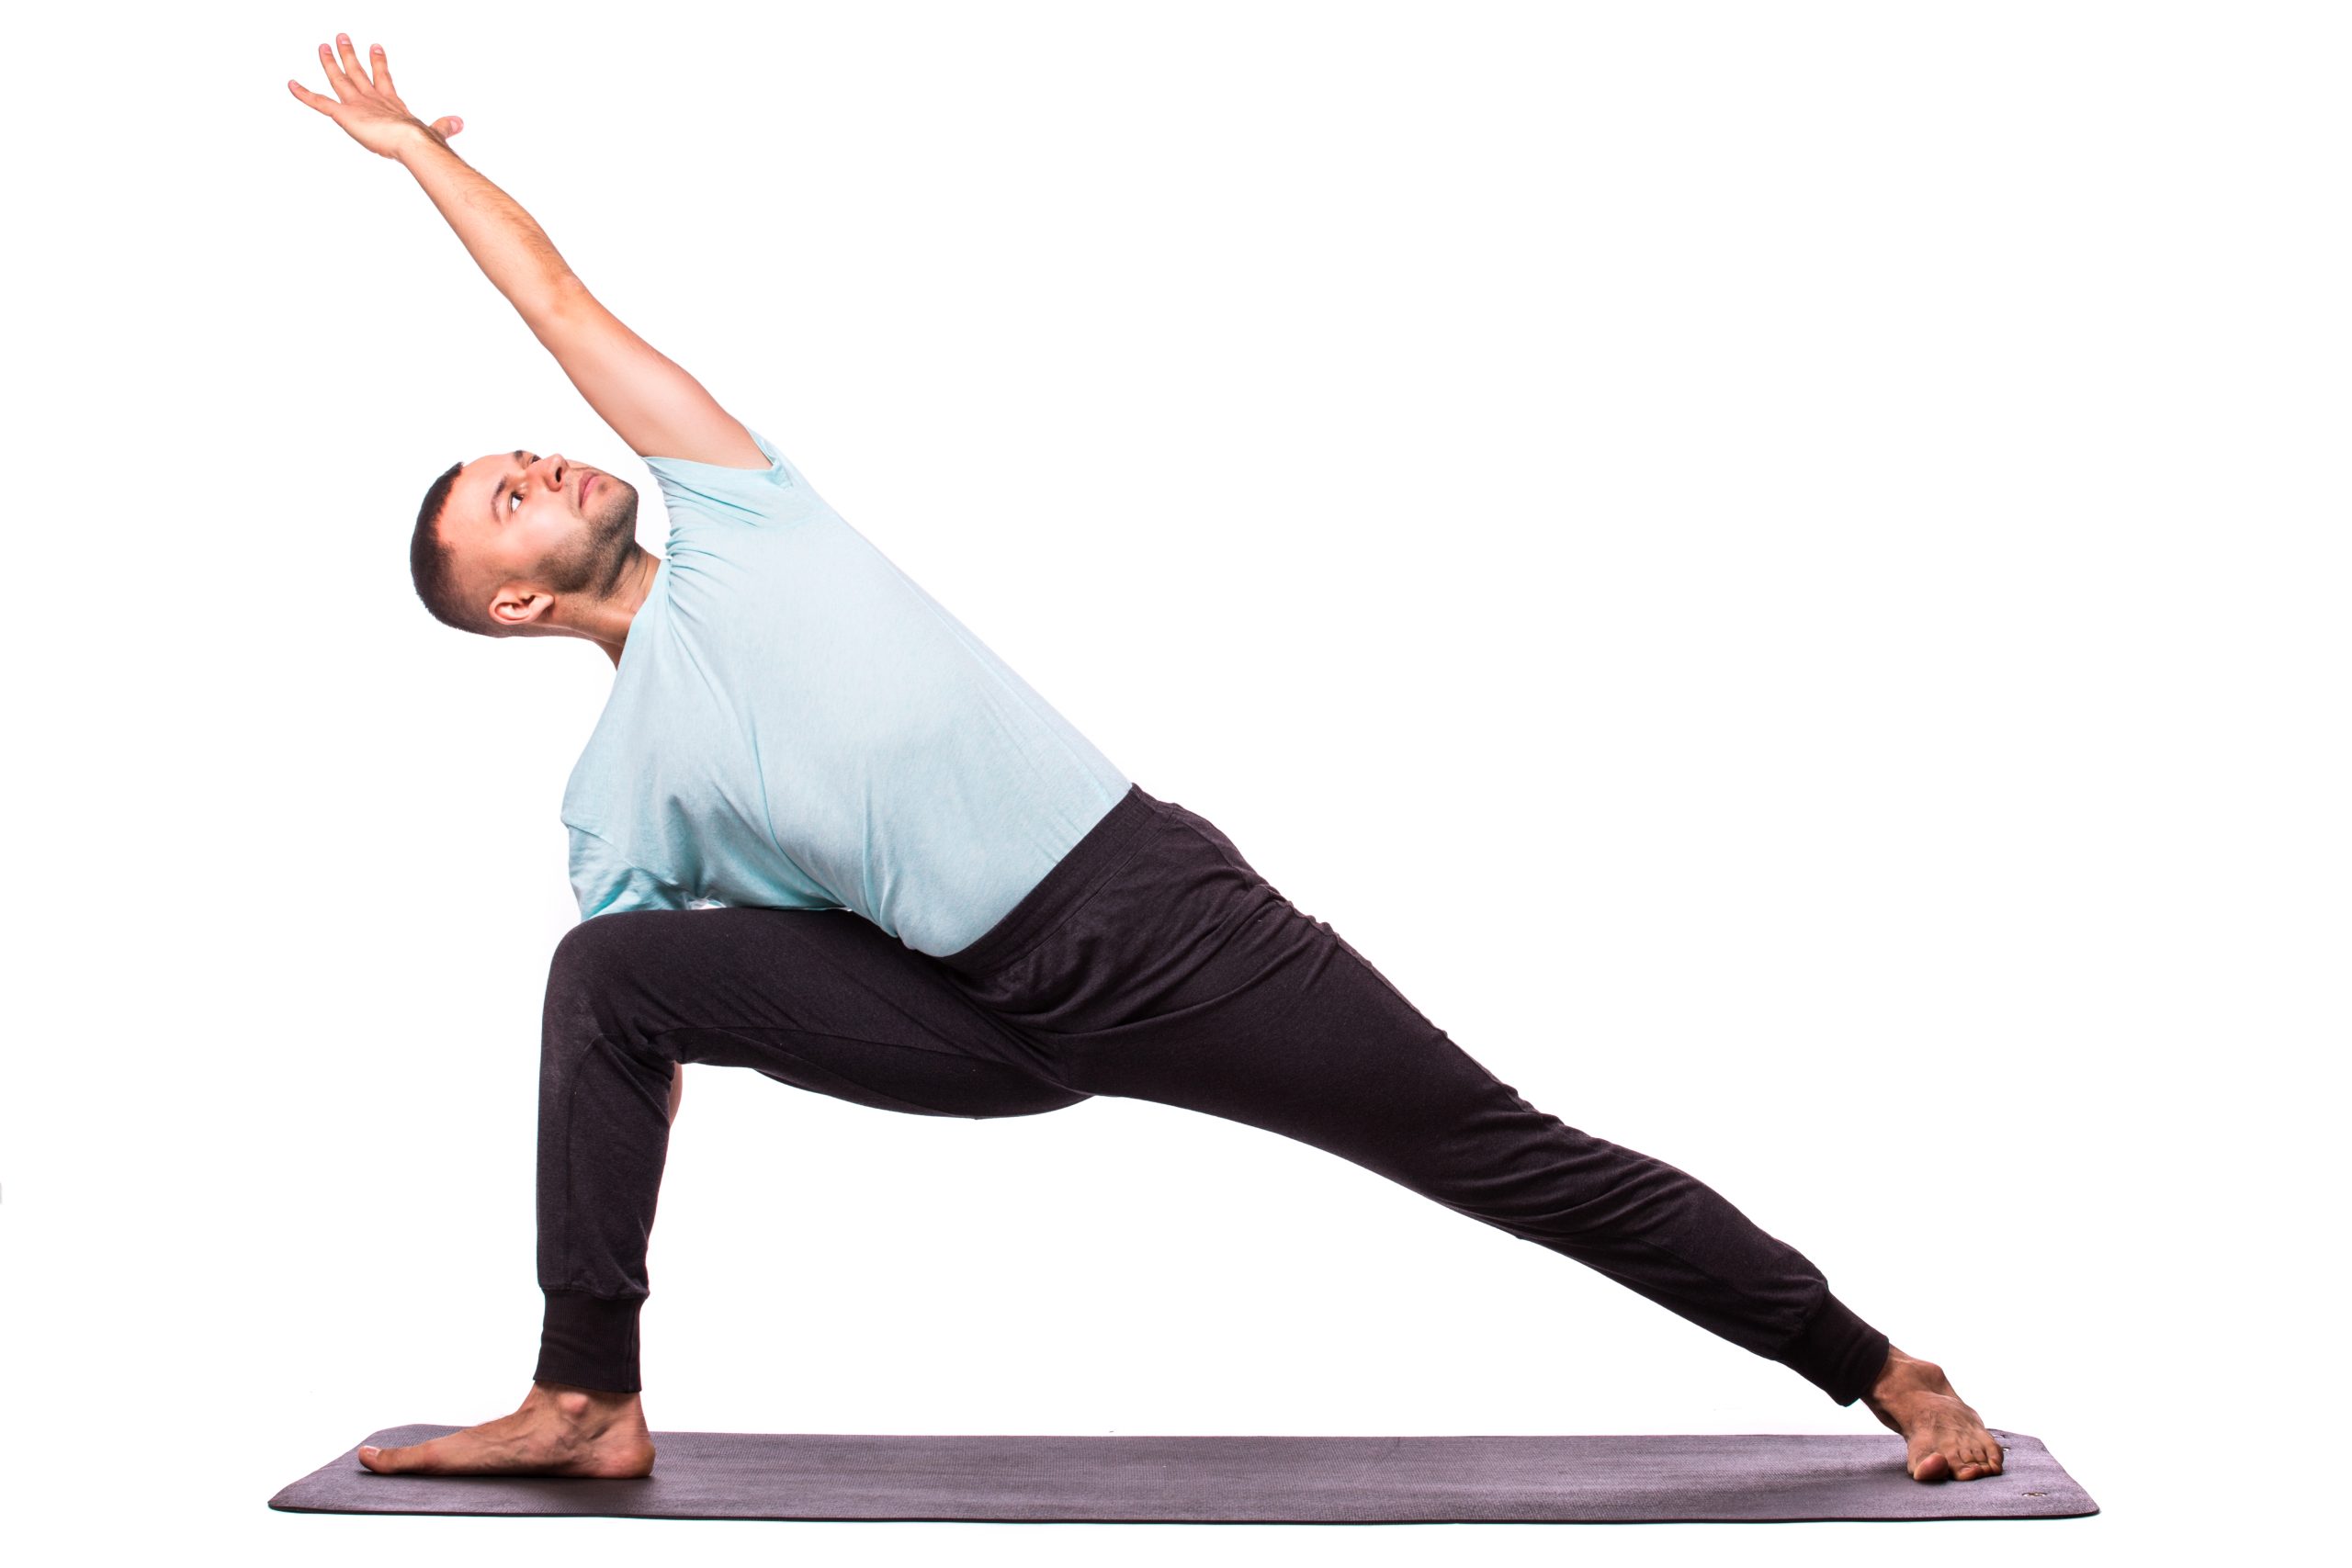 benefits of yoga for men